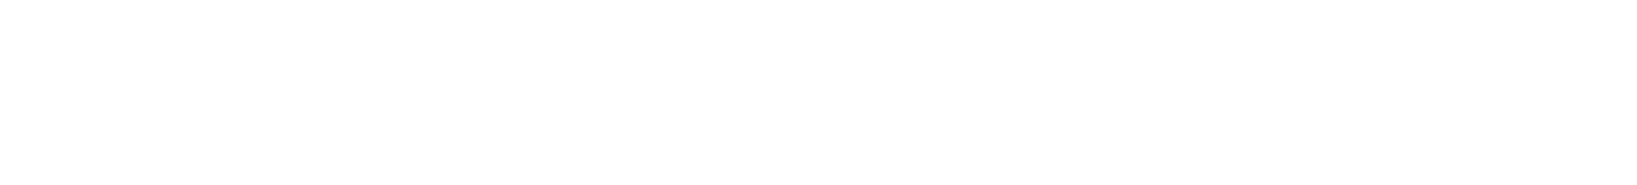 Nucor
 Logo groß für dunkle Hintergründe (transparentes PNG)